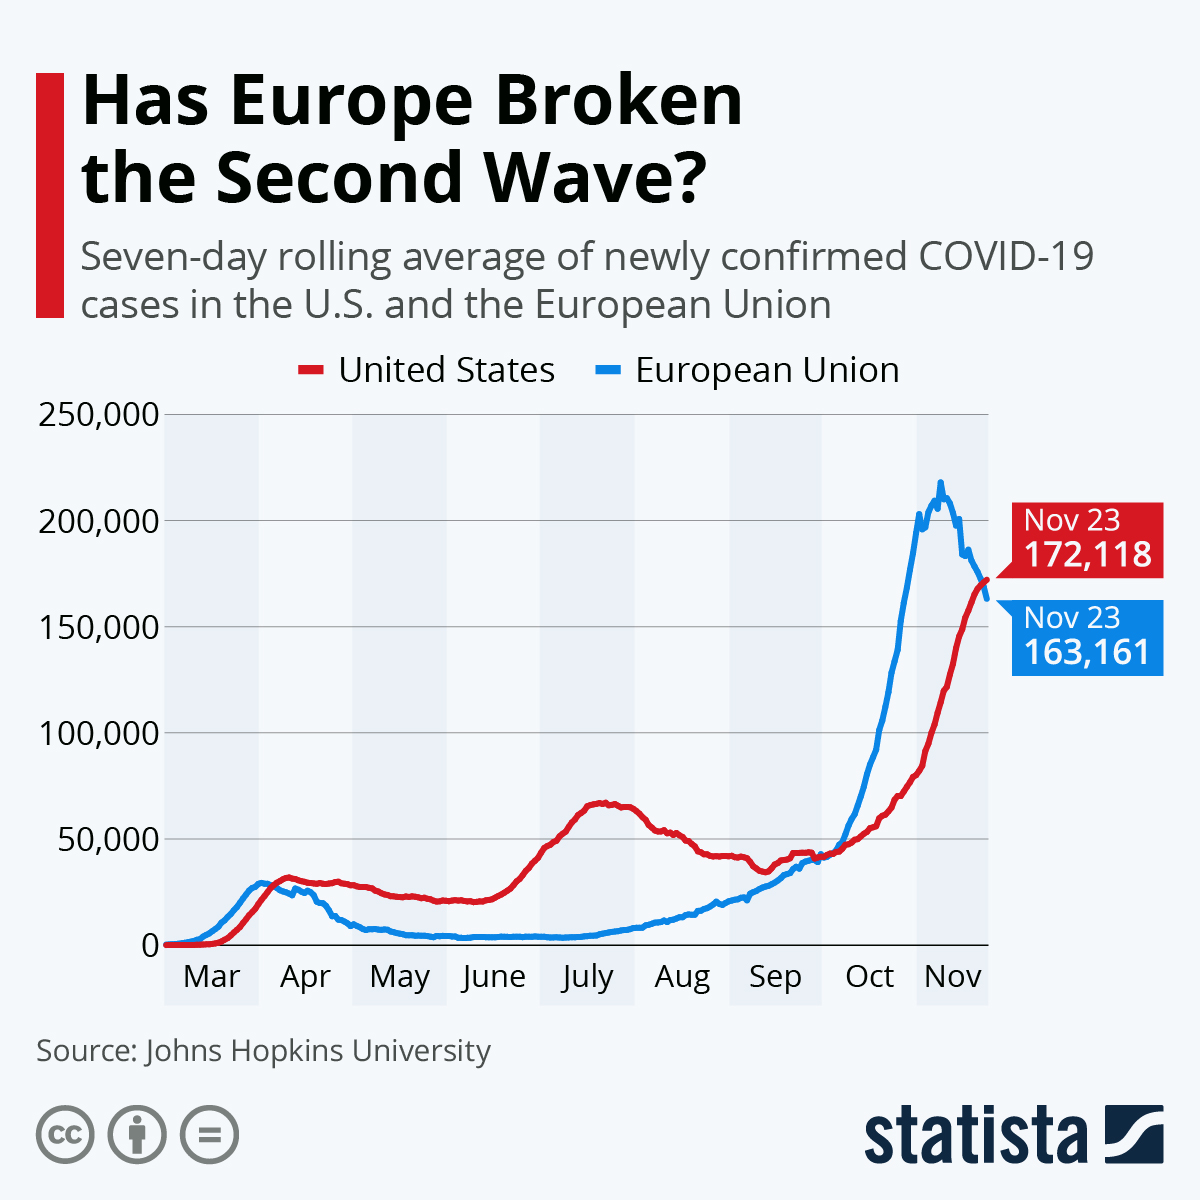 Has Europe Broken the Second Wave